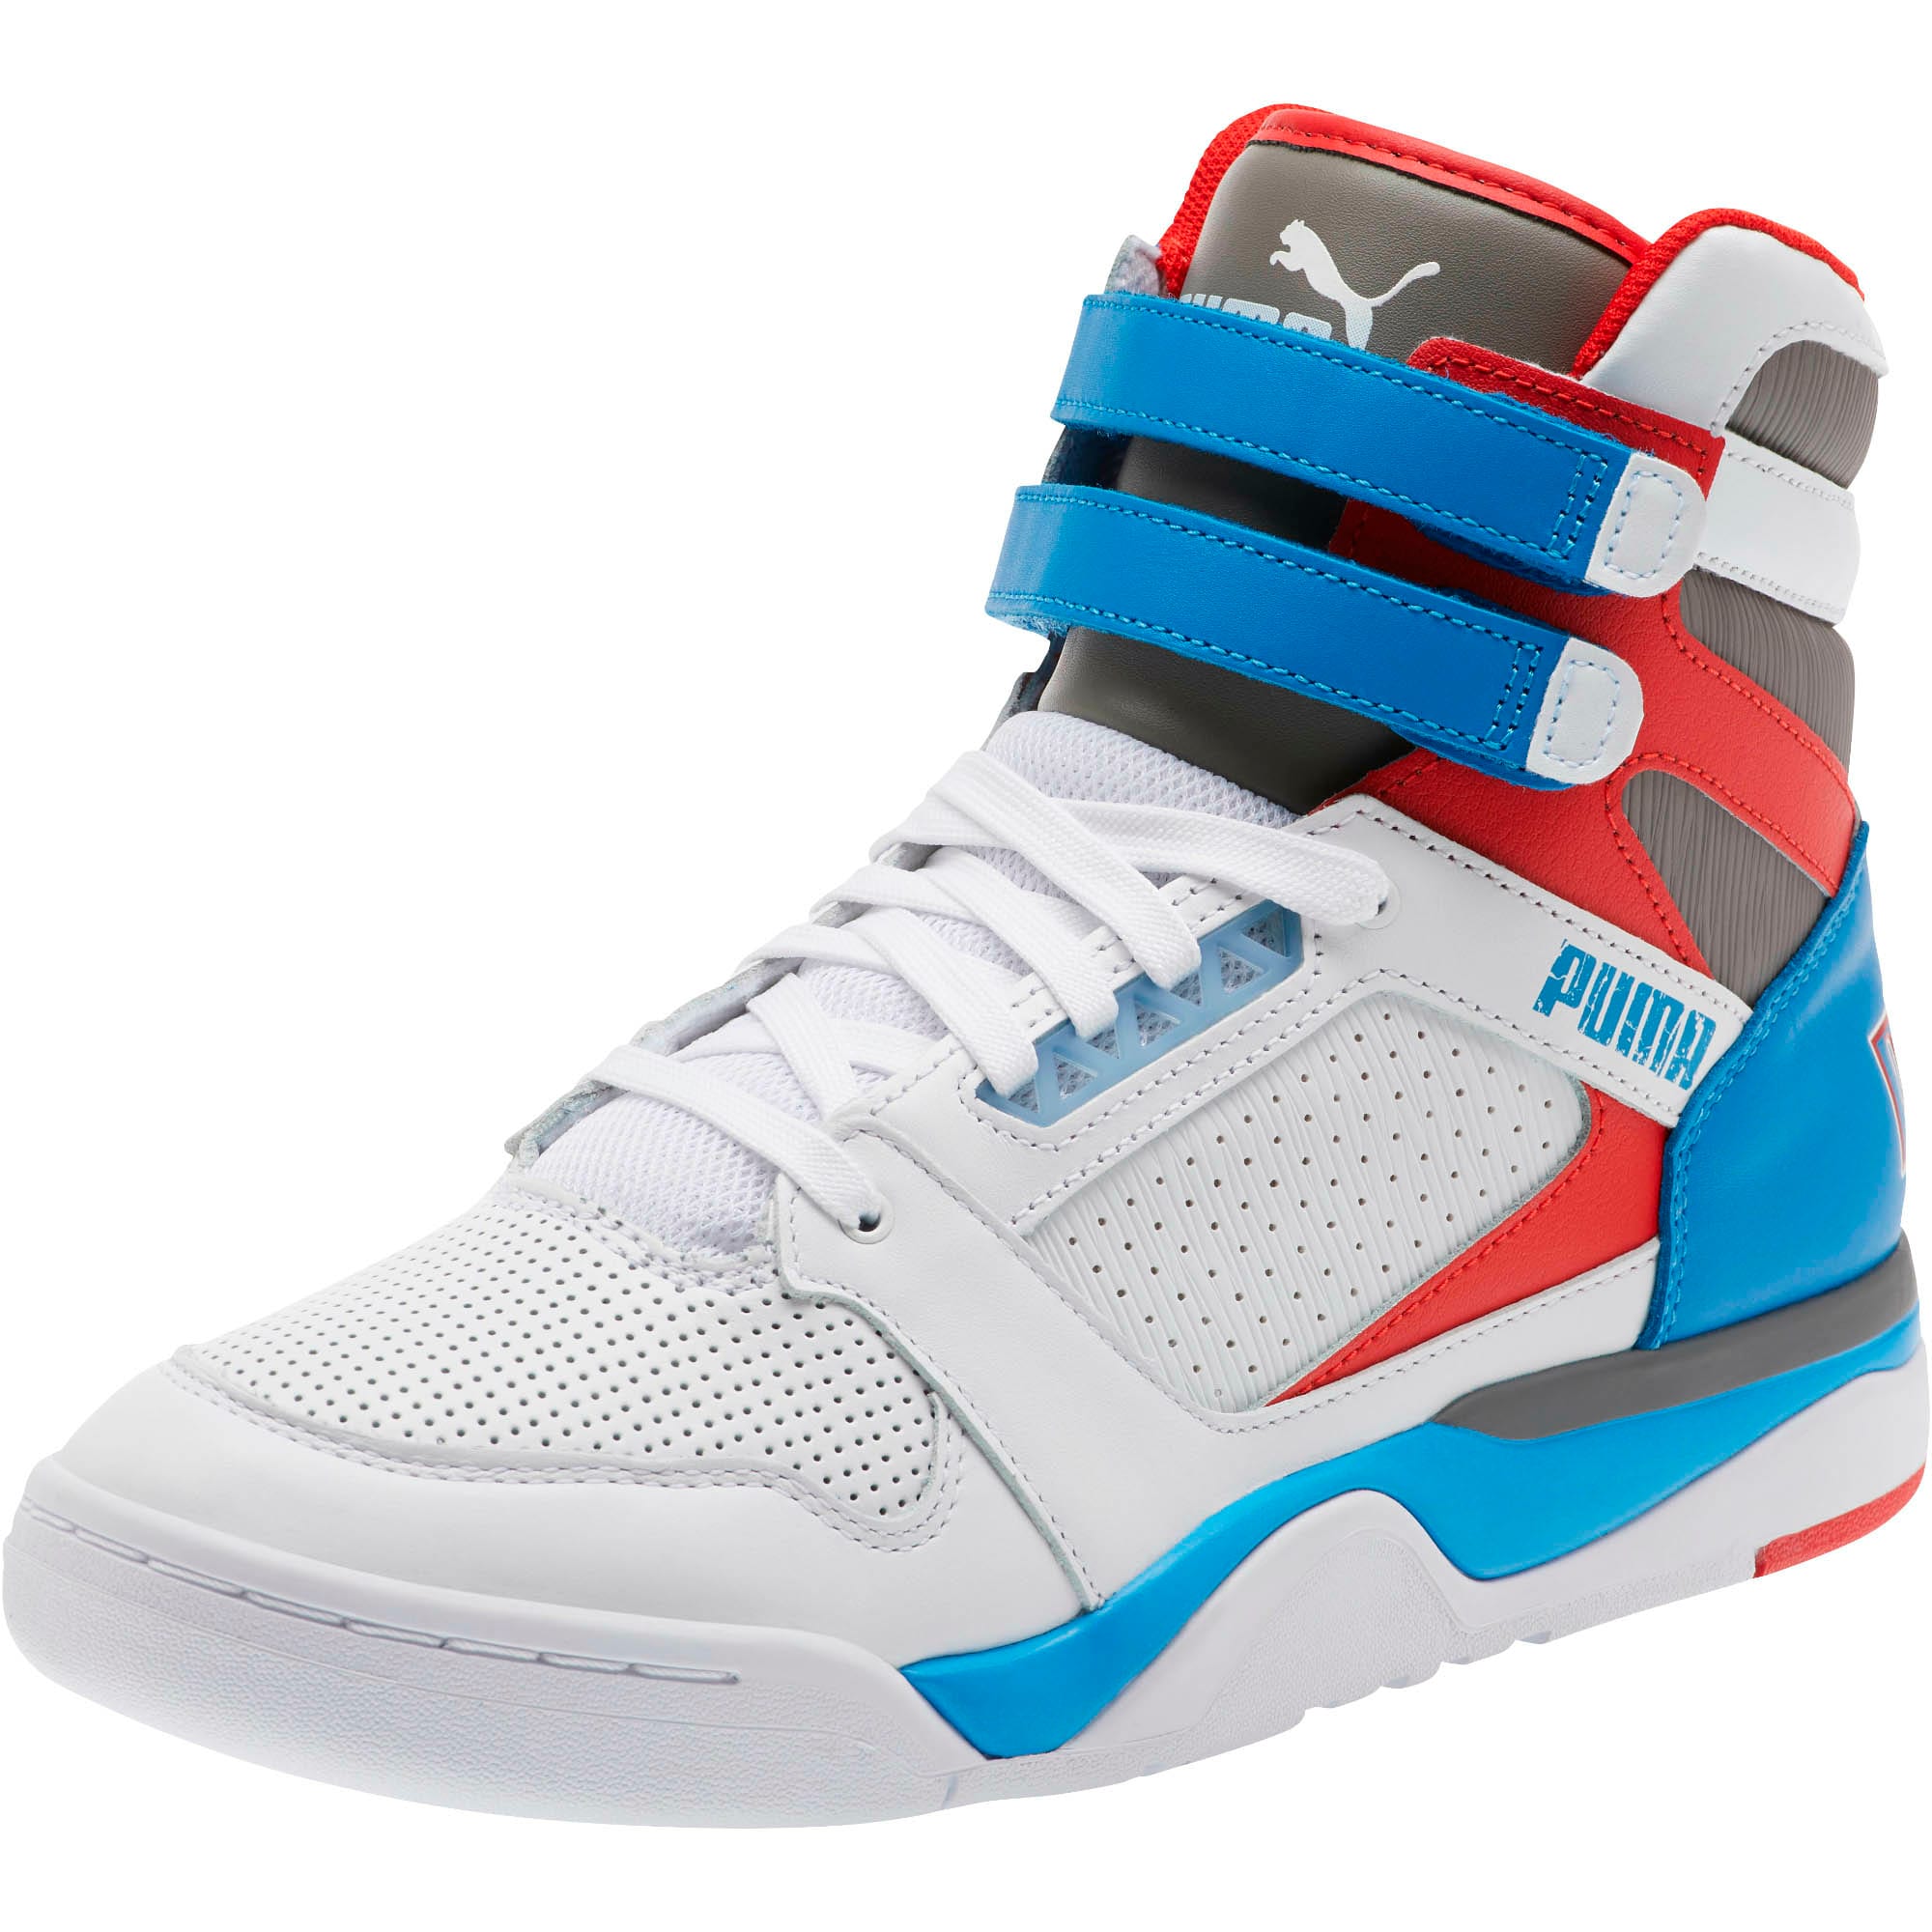 1989 puma basketball shoes